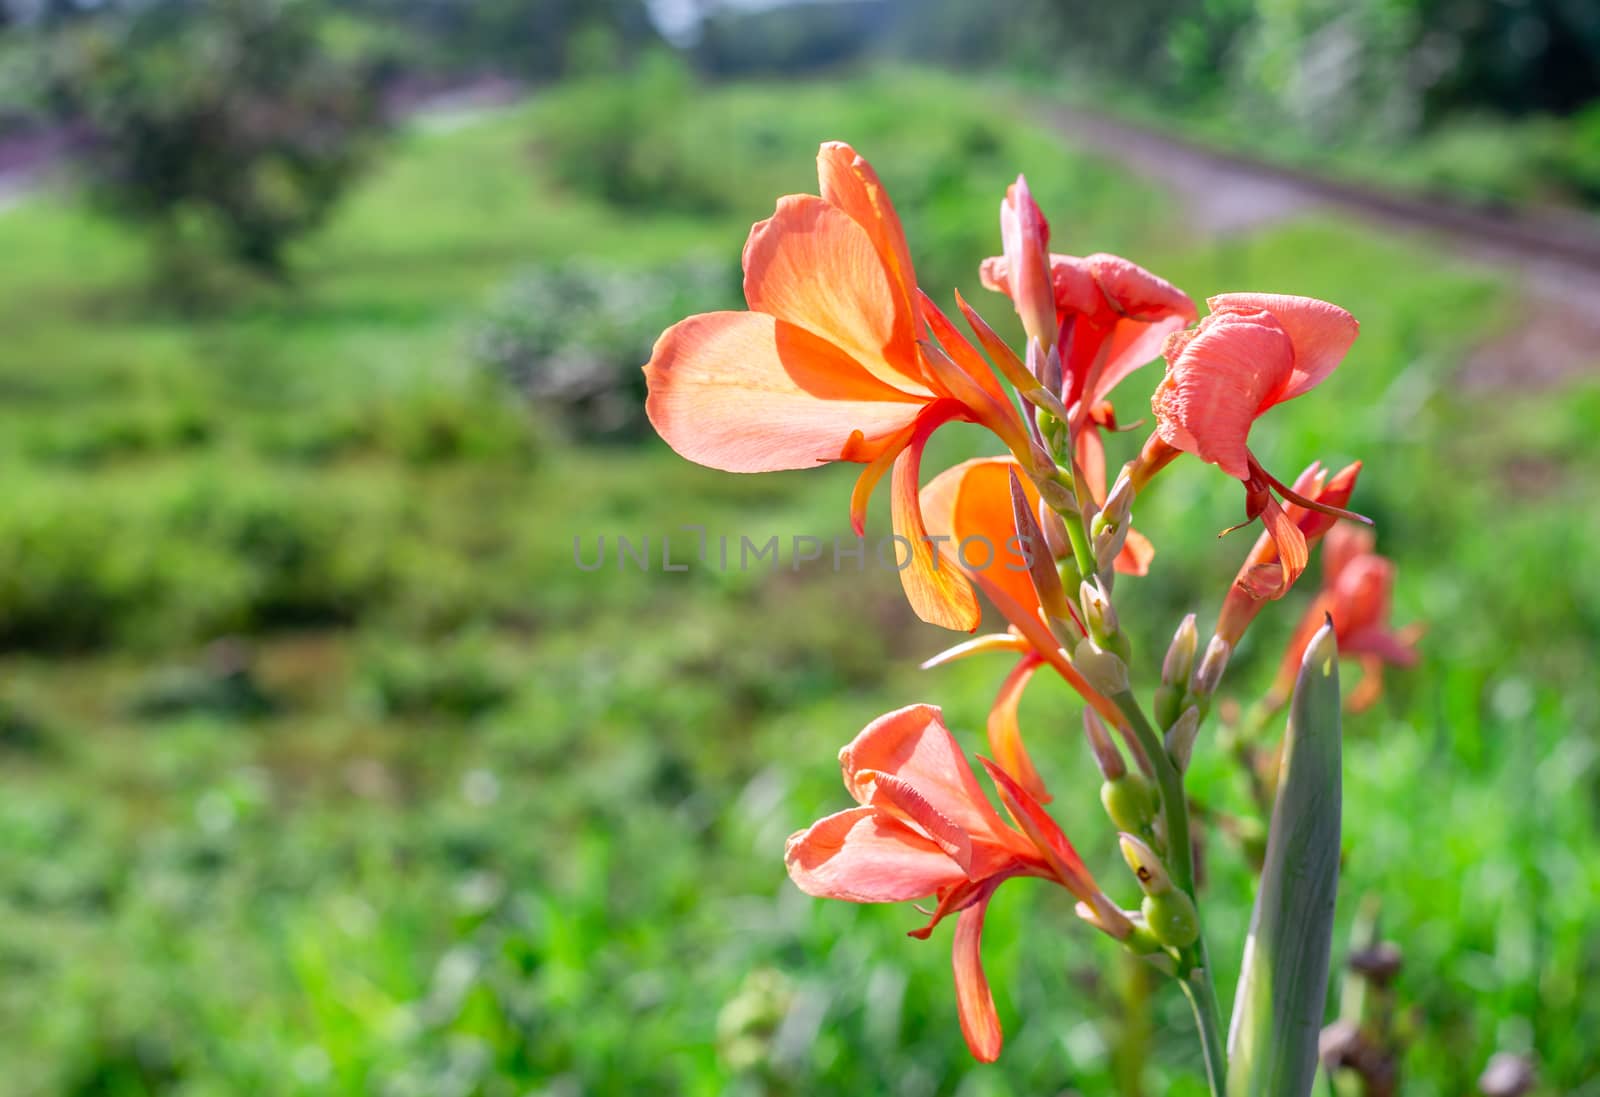 Lilium bulbiferum or orange lily flower by Suwanmanee